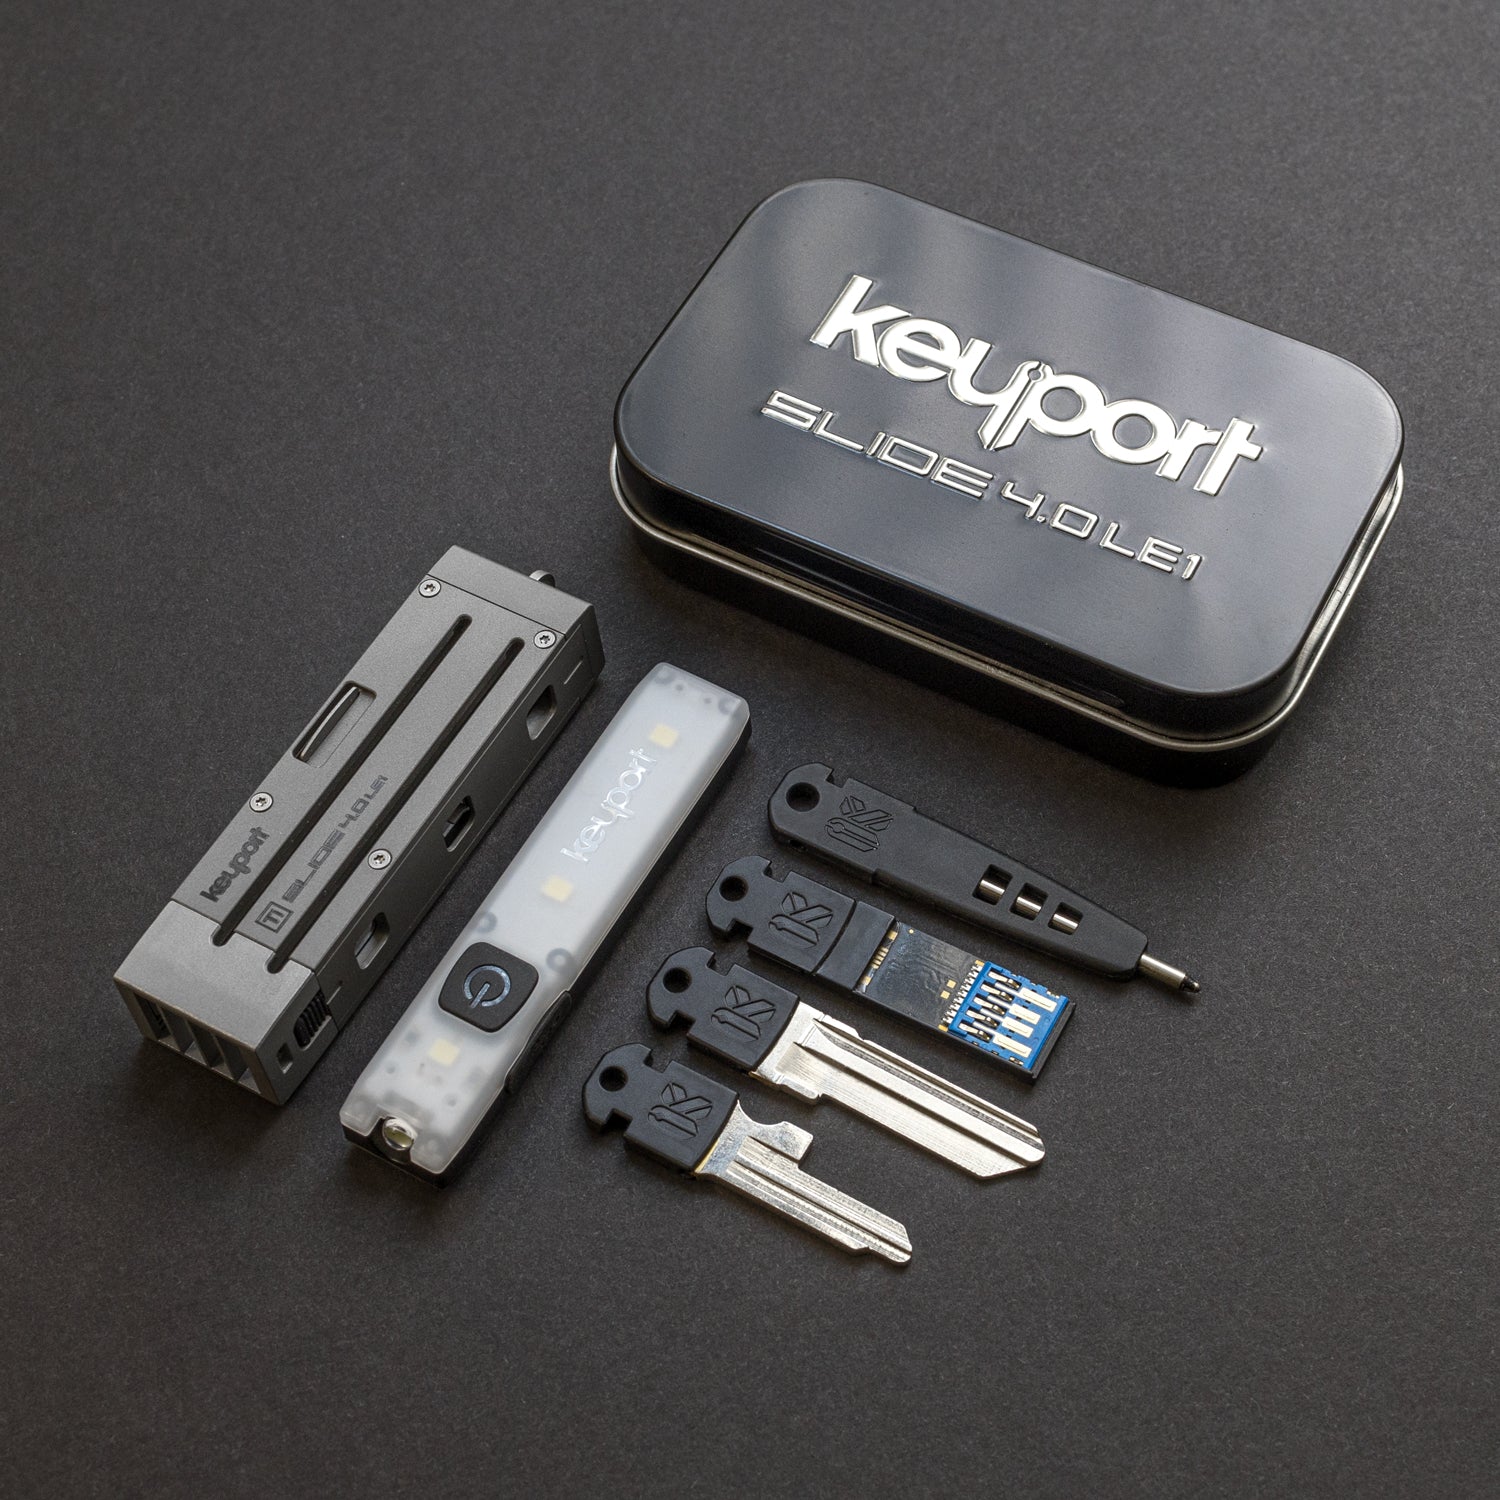 Keyport Slide 4.0 LE1 Gift Kit